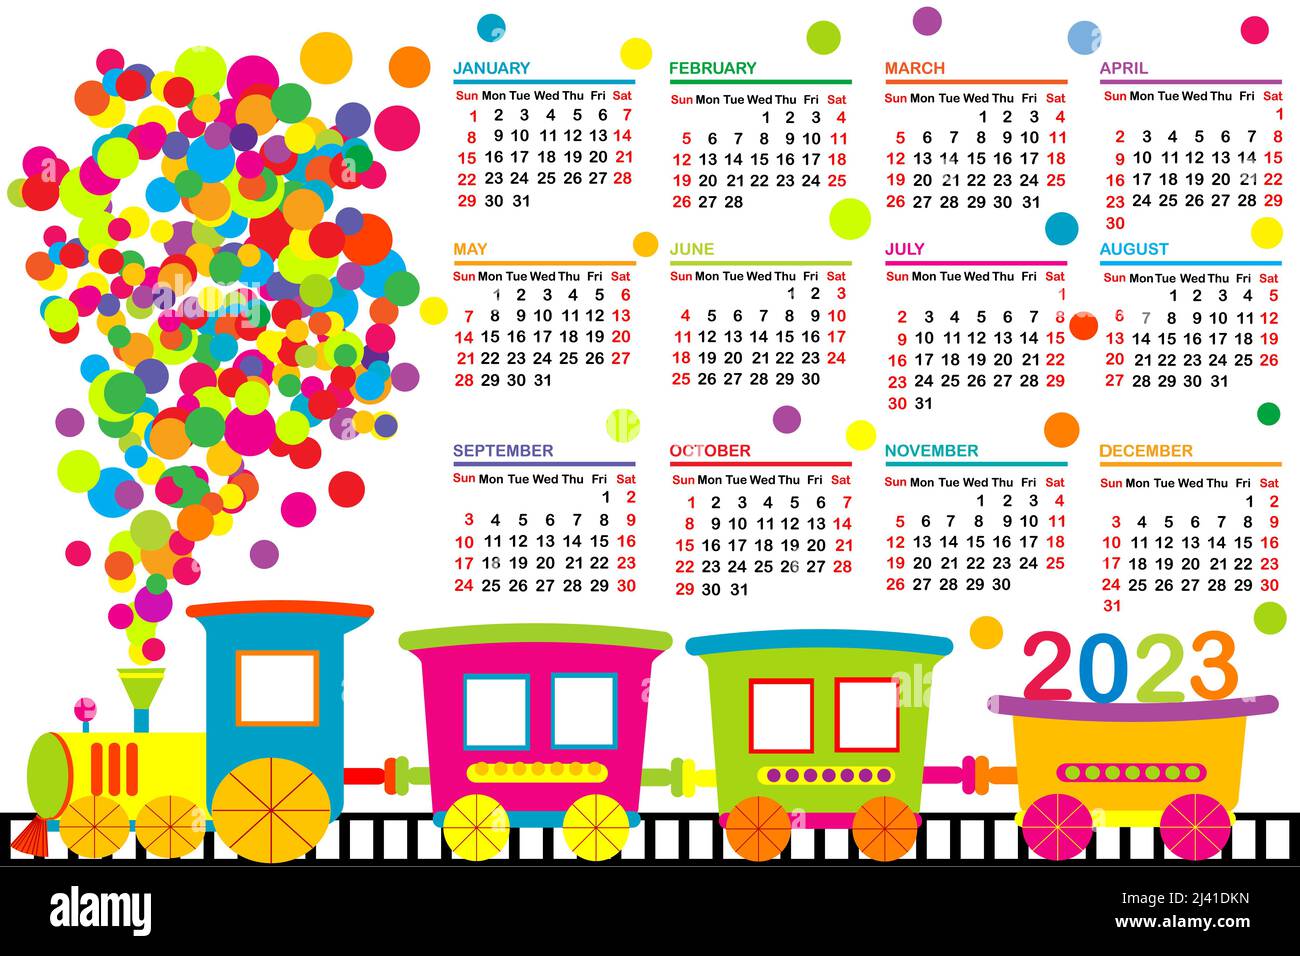 Календарь 2023 2 2. Календарь 2023 детский. Calendar for Kids. Календарь на 2023 год. Календарь 2023 вектор.